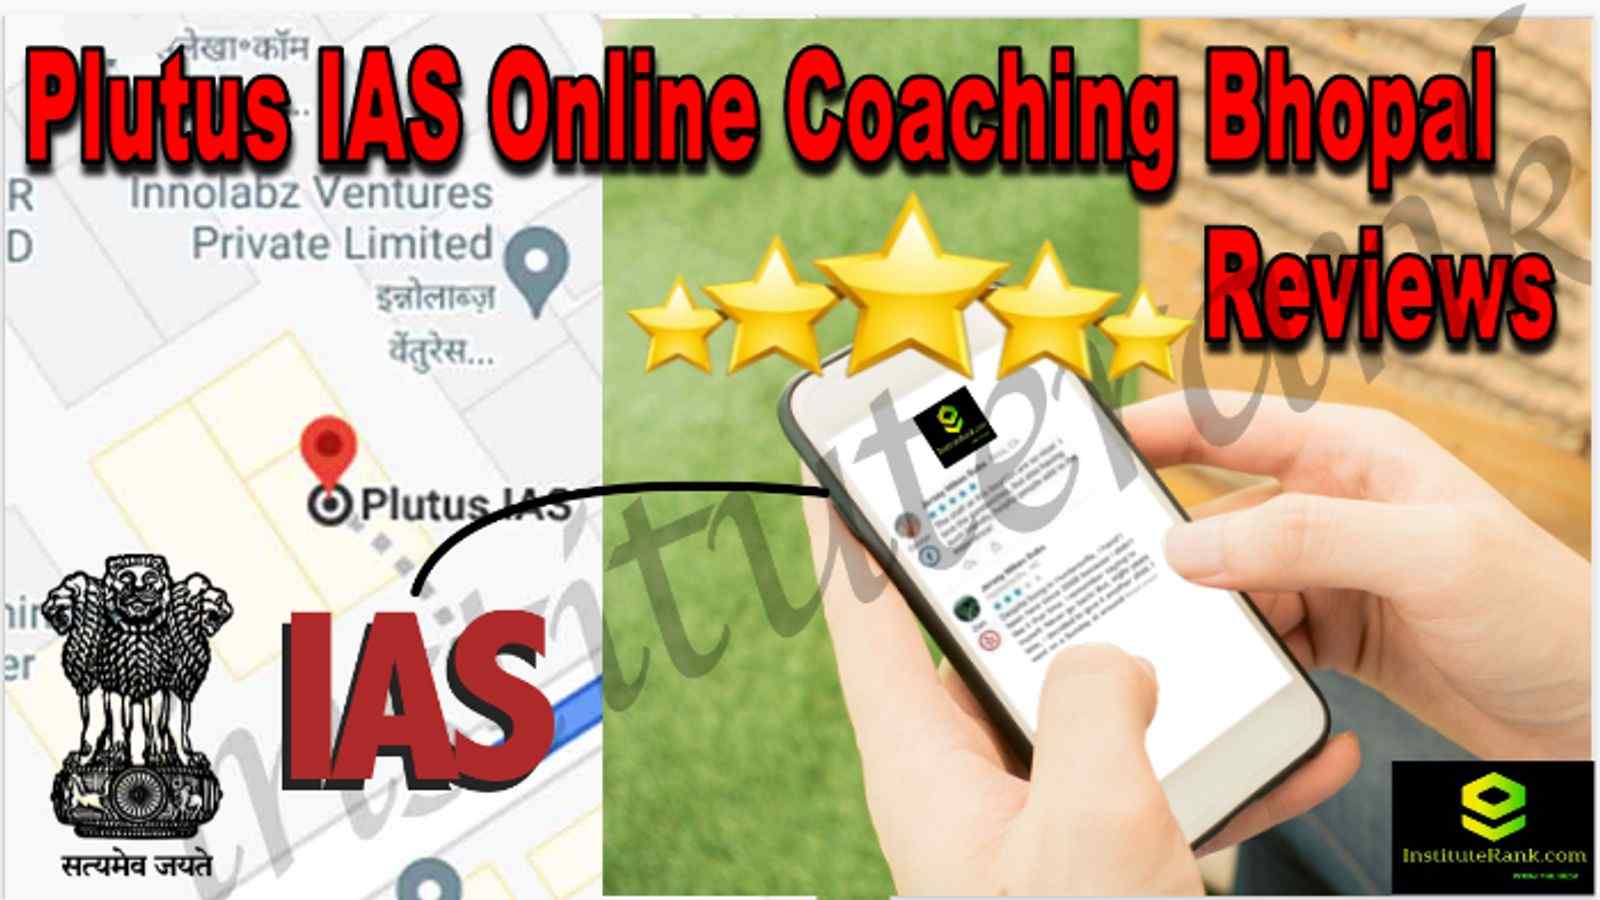 Plutus IAS Online Coaching Bhopal Reviews